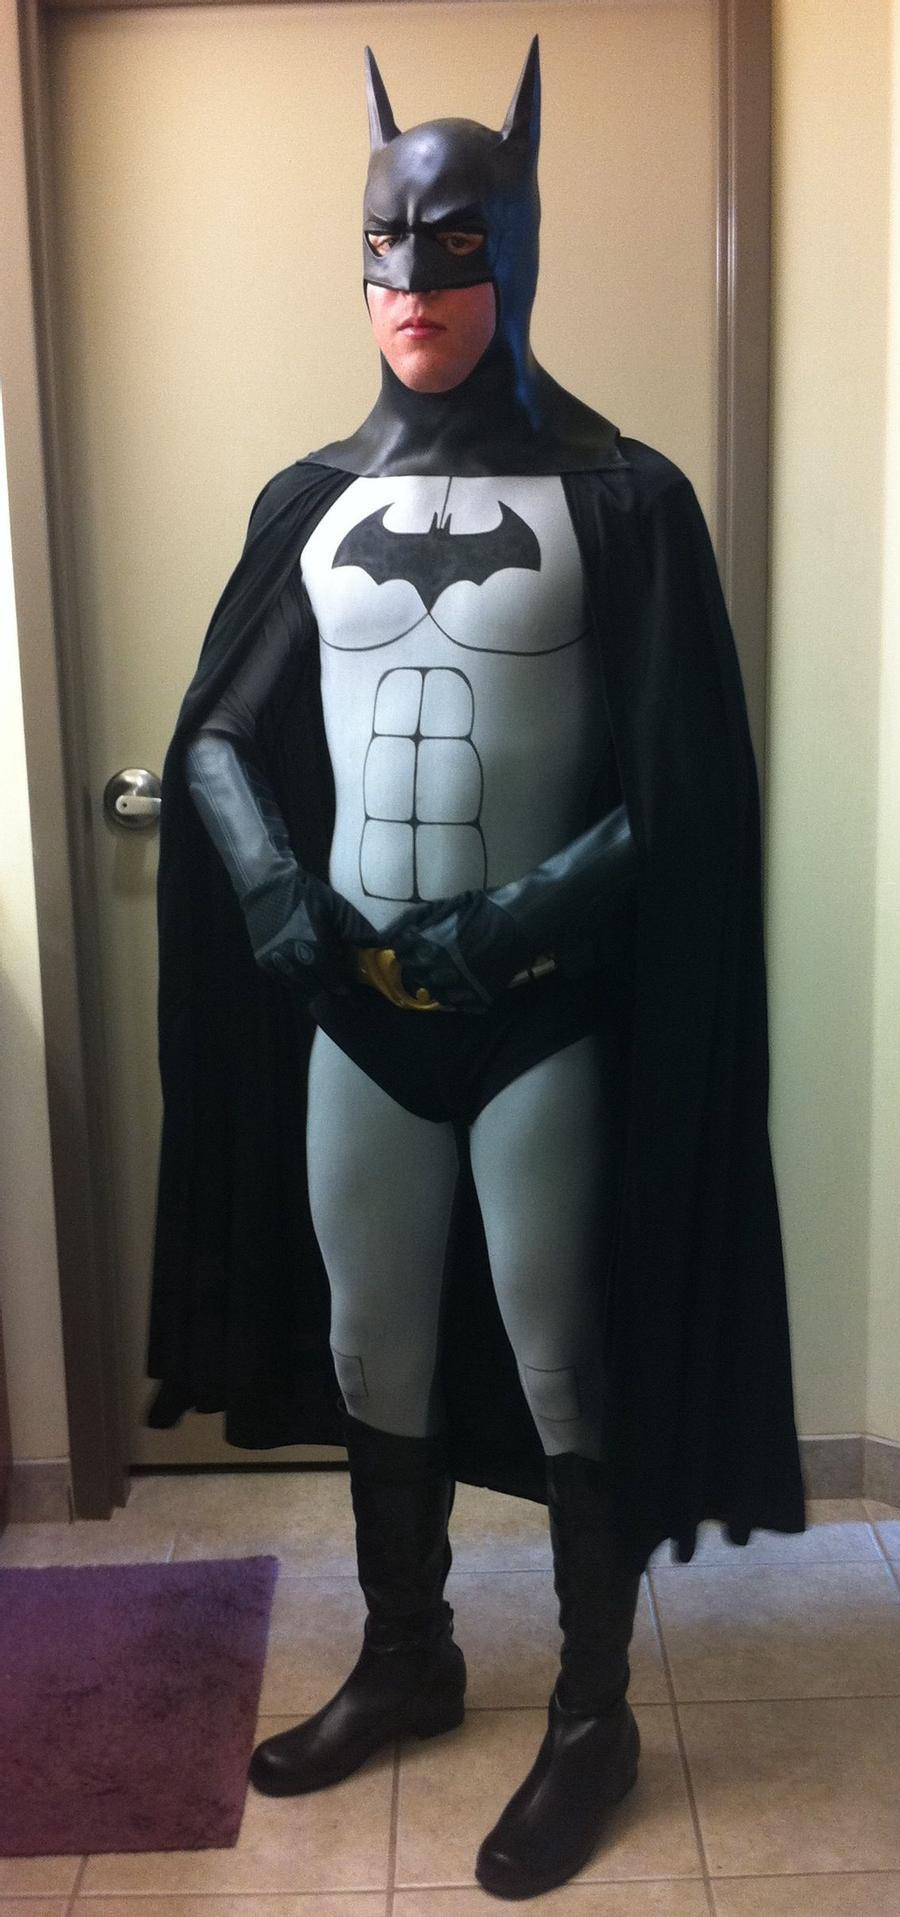 Batman DIY Costume
 My Homemade Batman Costume by Cjrowland on DeviantArt